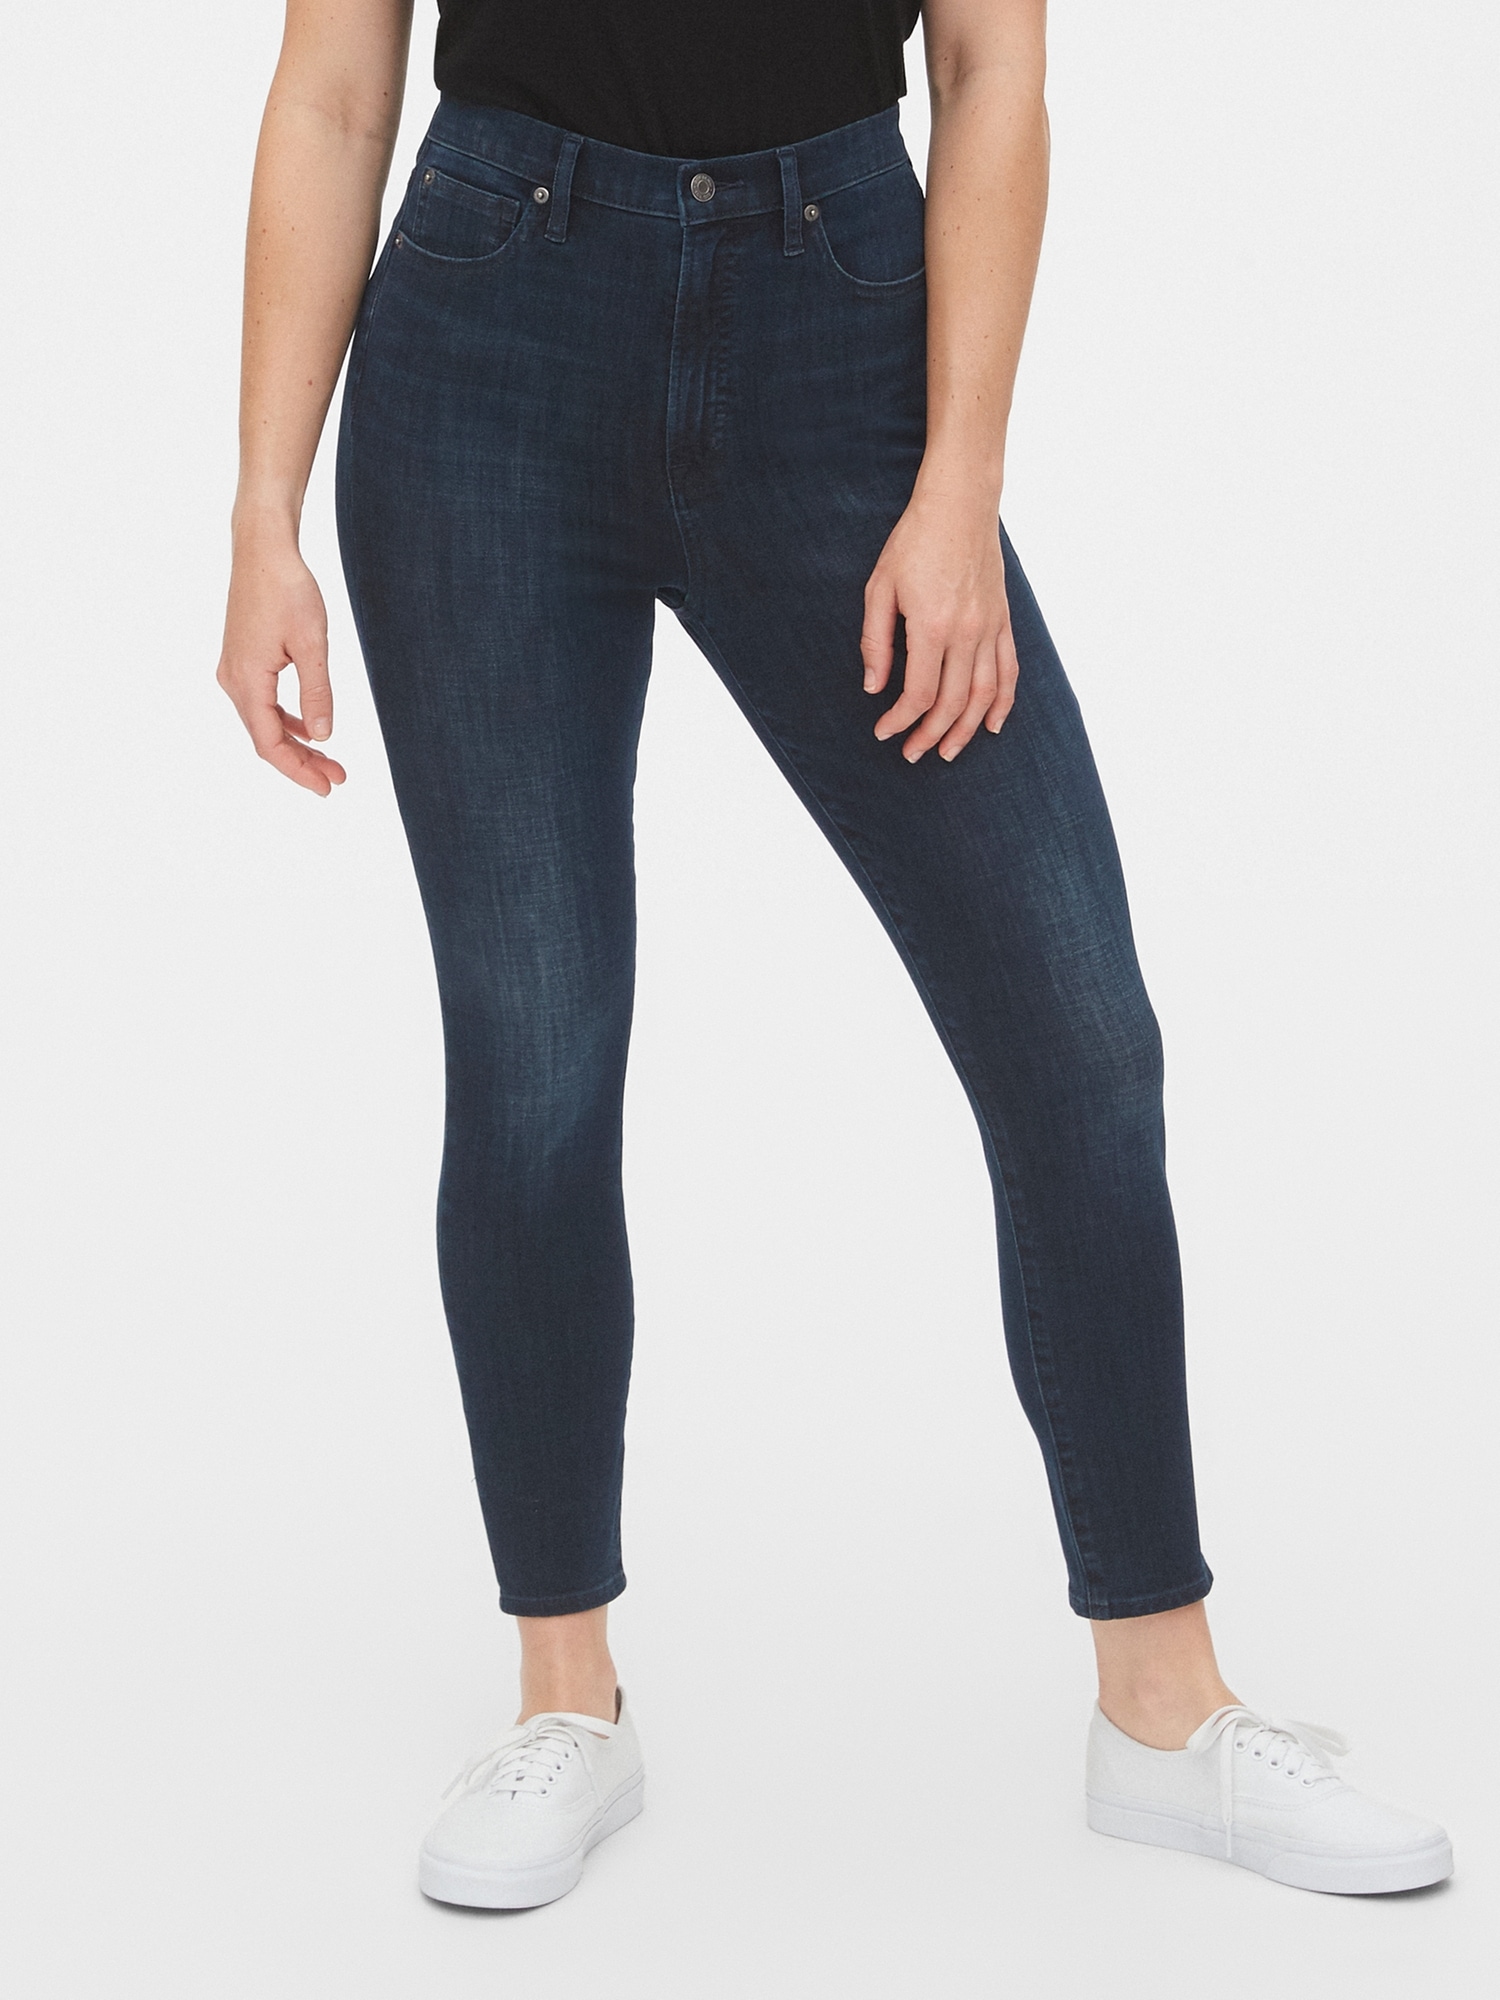 gap 360 stretch jeans